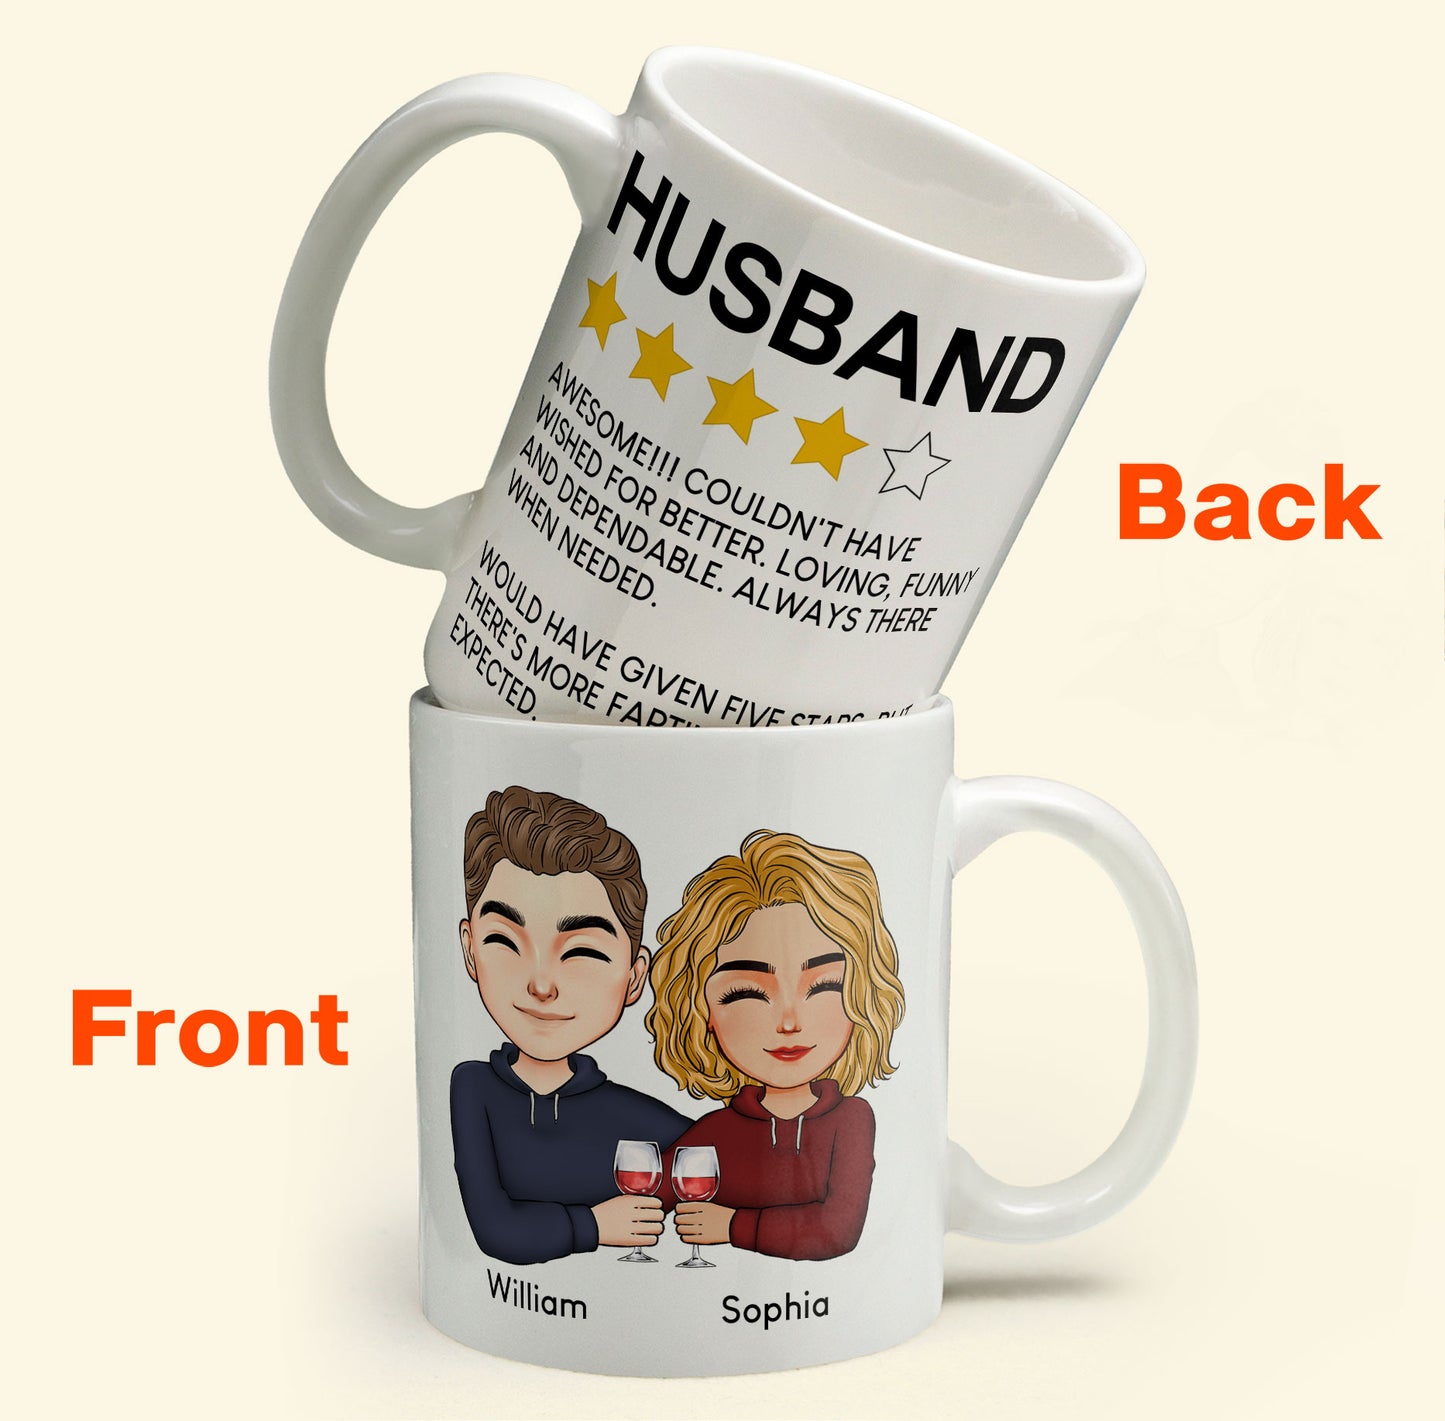 To Husband Five Star Funny - Personalized Mug